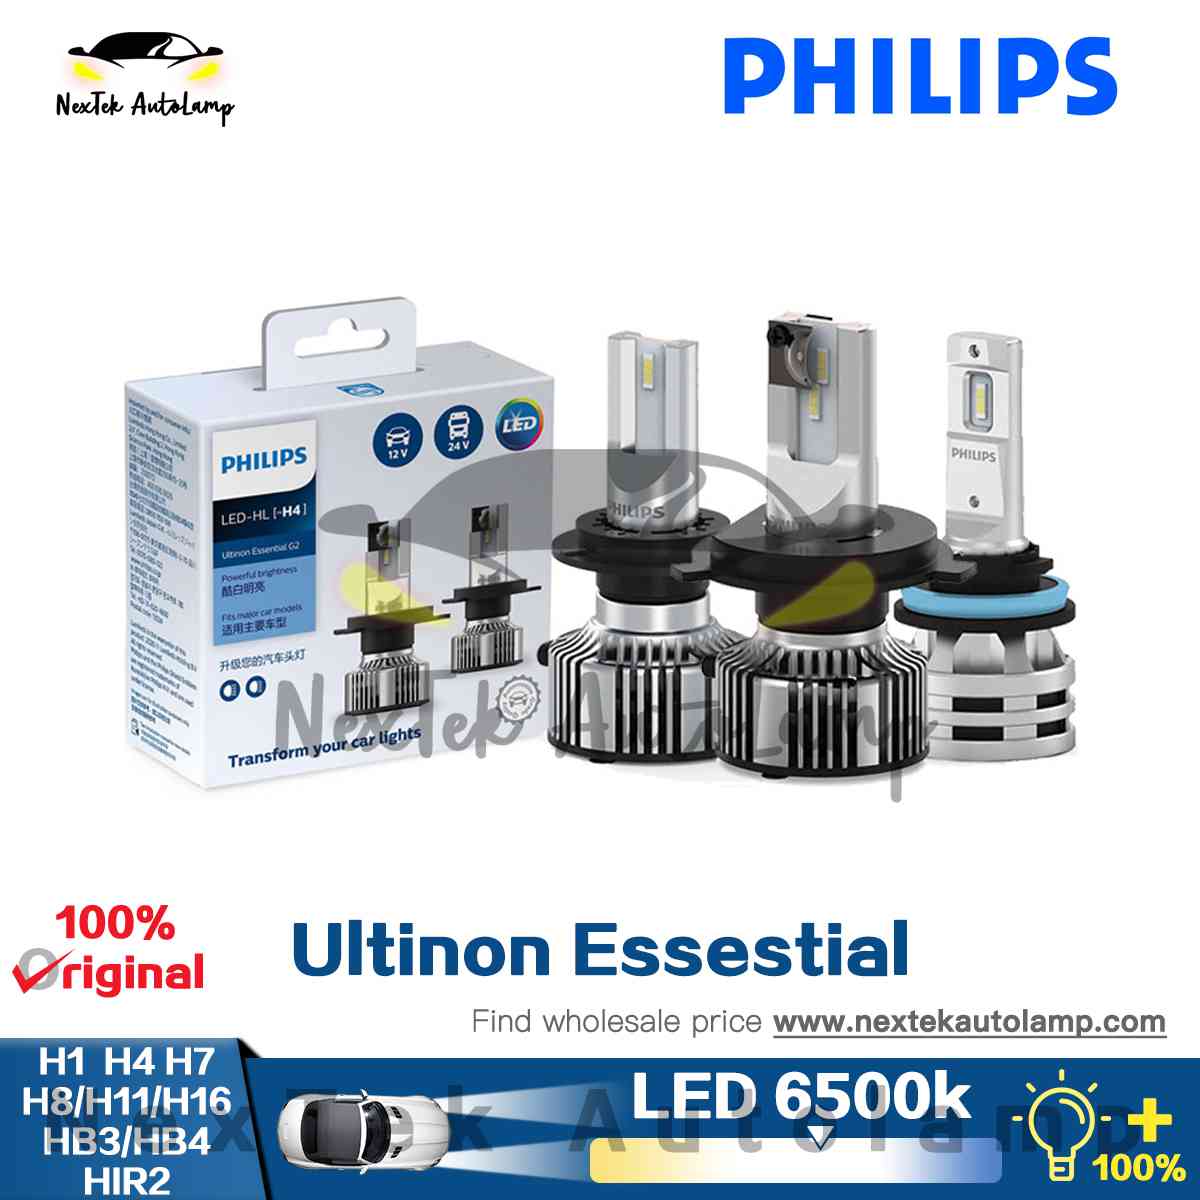 Phlilps Led H1 H4 H7 H11 Ultinon Pro9000 H8 H16 Hb3 Hb4 H1r2 9005 9006 9012  Auto Head Light 5800k White 250% Vision Led Car Lamp - Car Headlight Bulbs( led) - AliExpress